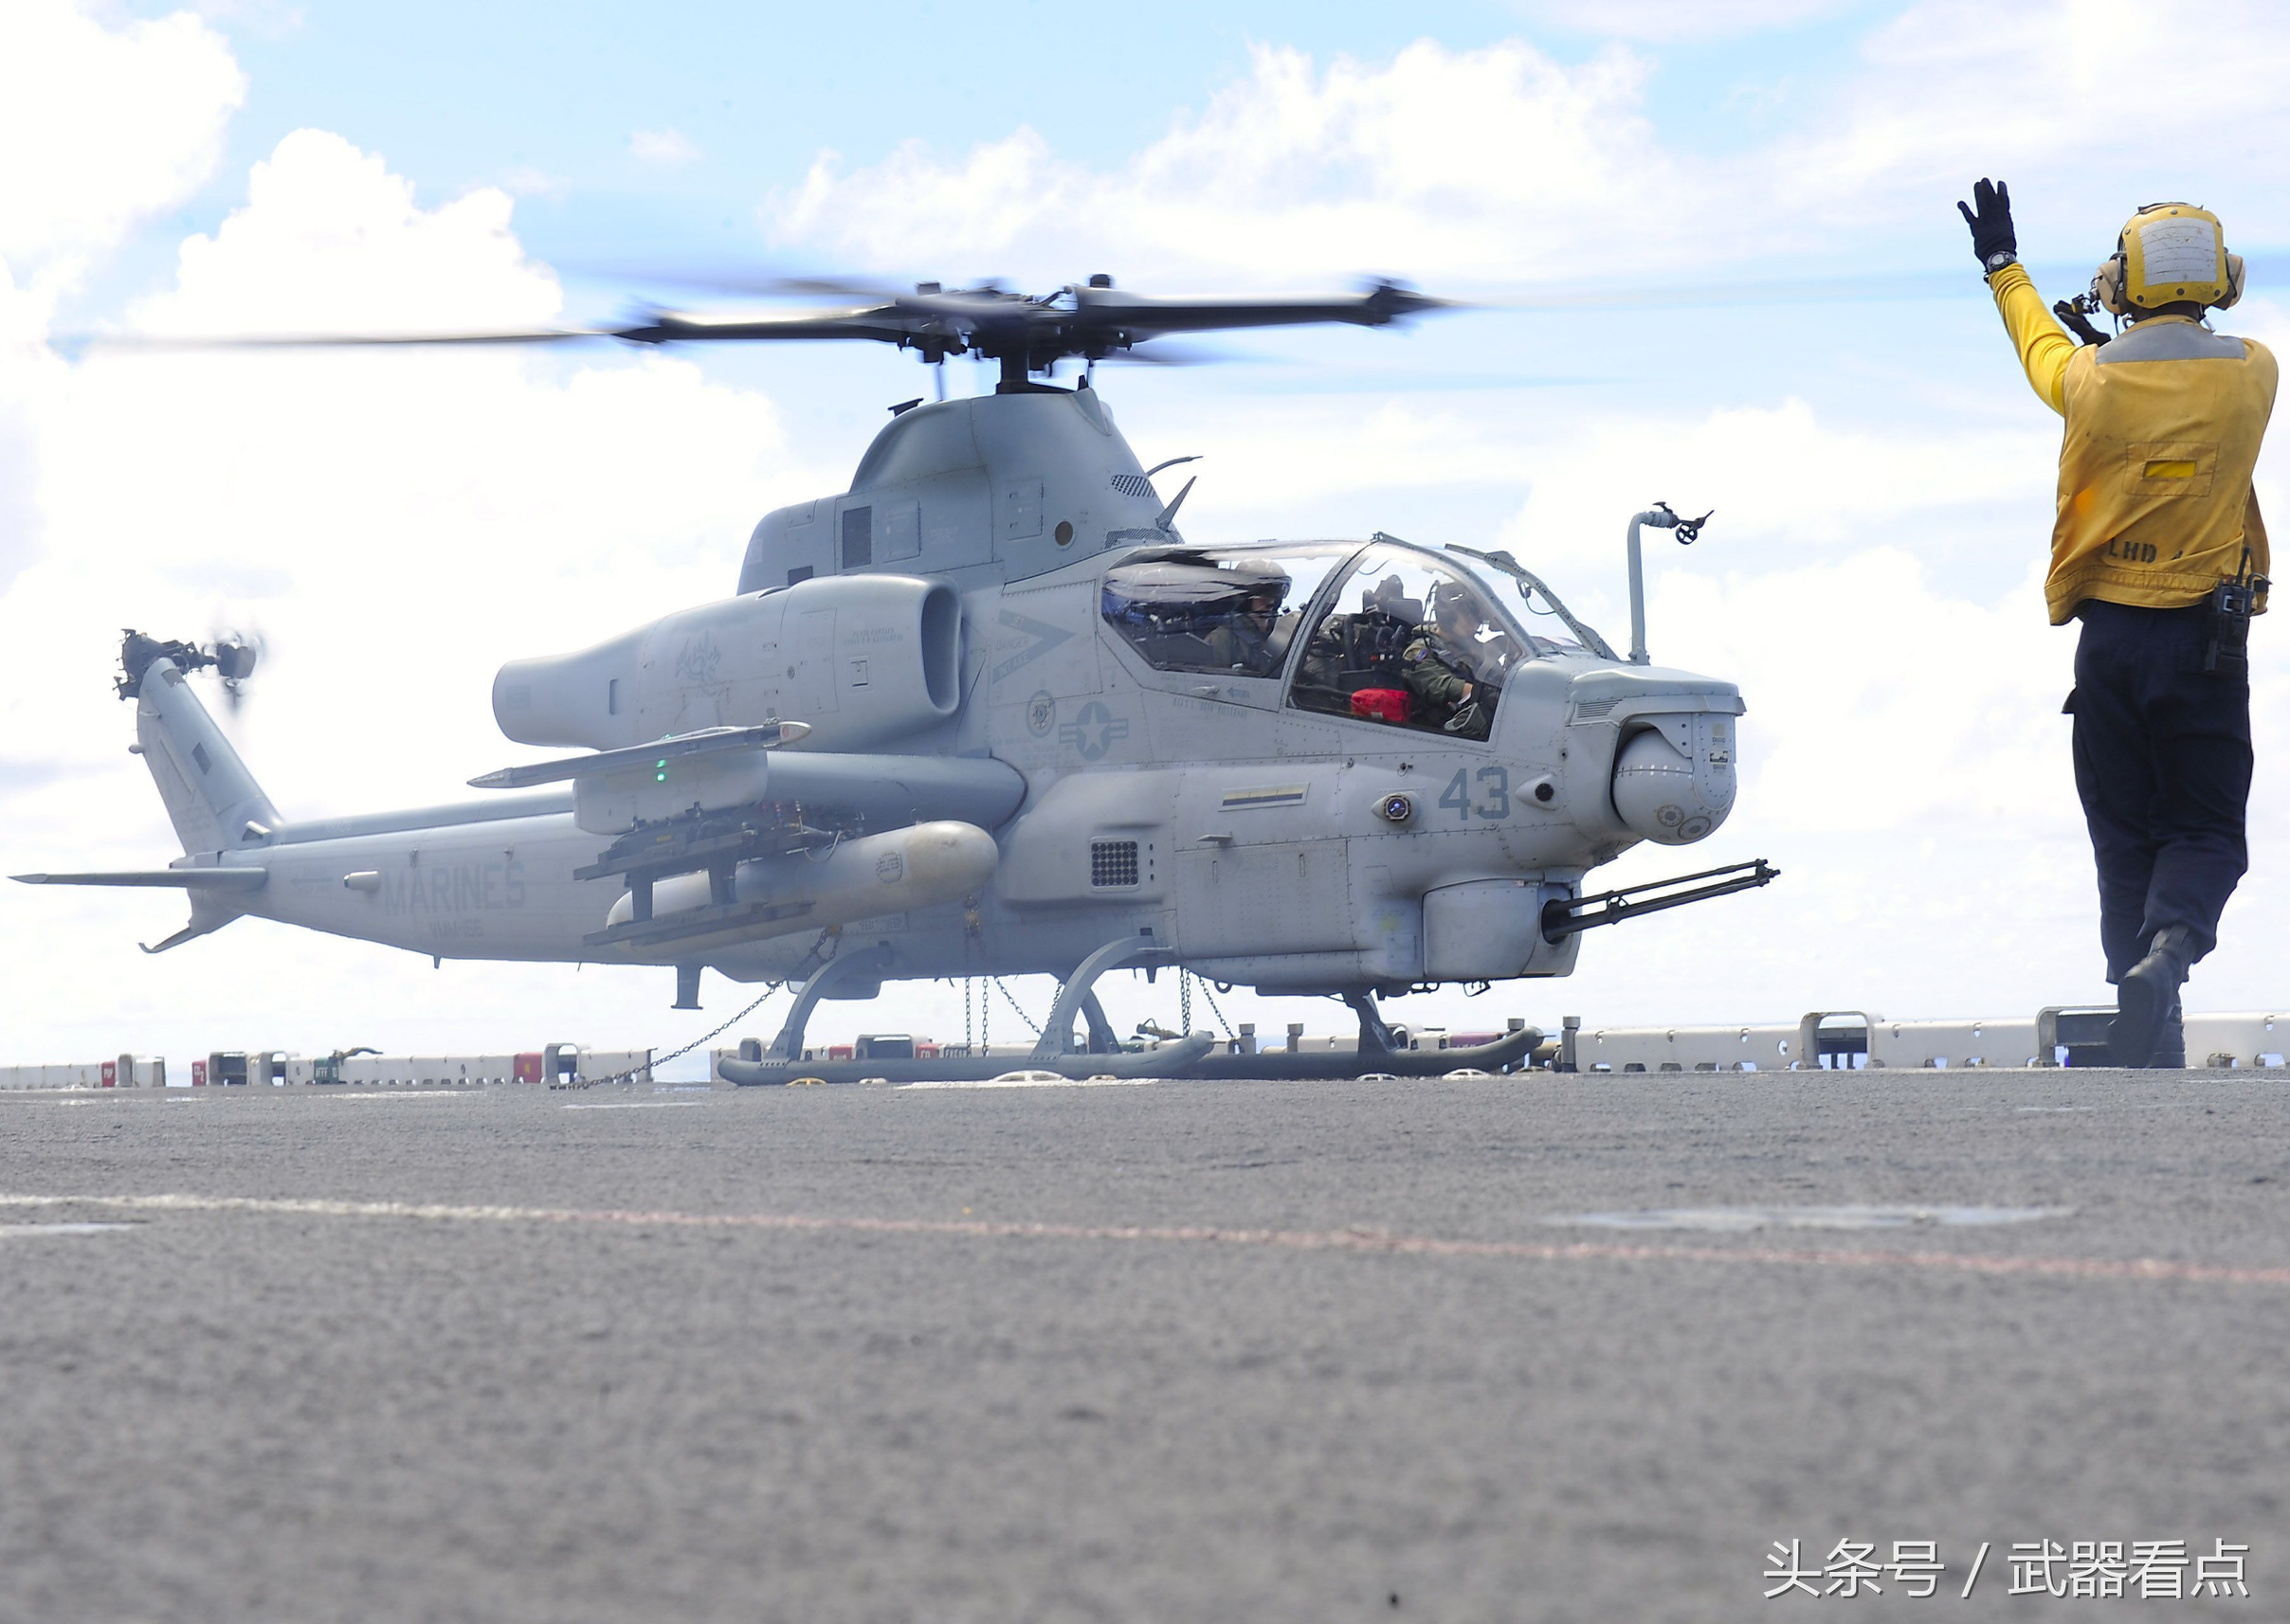 ah-1(超级)眼镜蛇()直升机高清相片